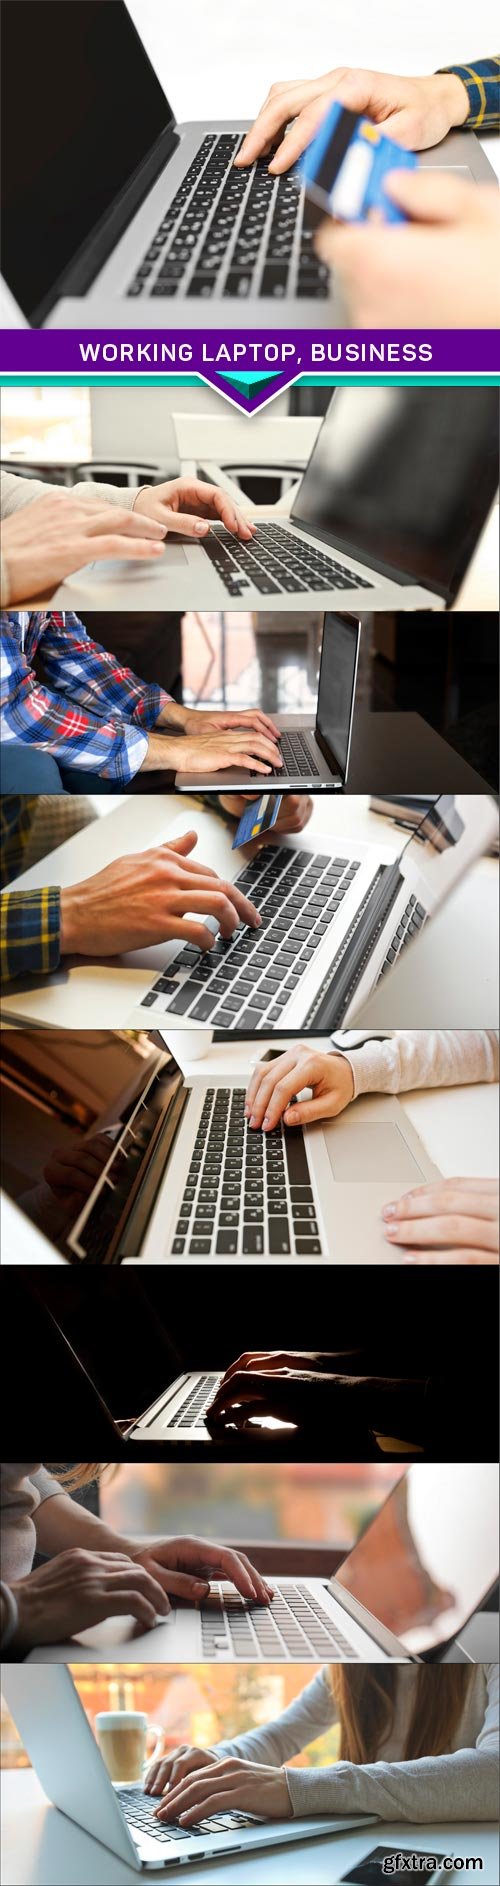 Working laptop, business 8X JPEG